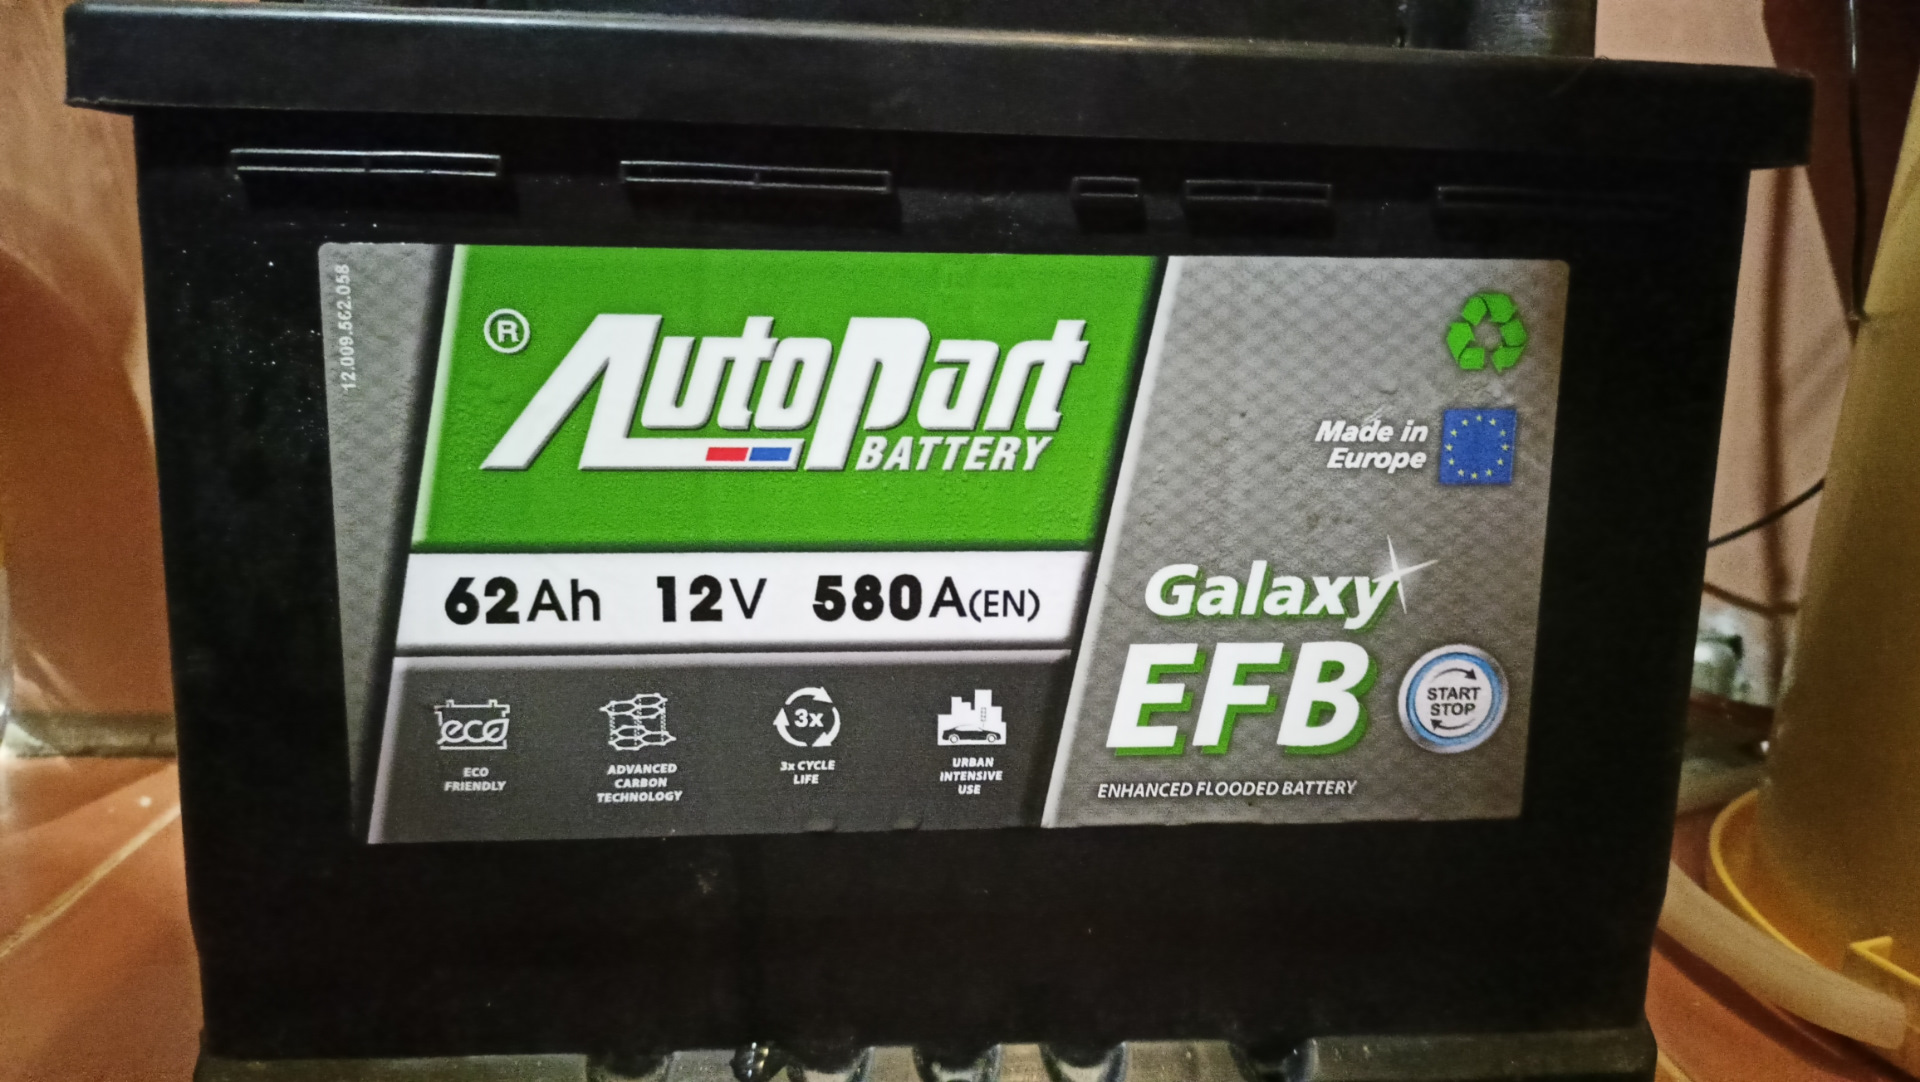 Battery перевести. Galaxy EFB где производятся.